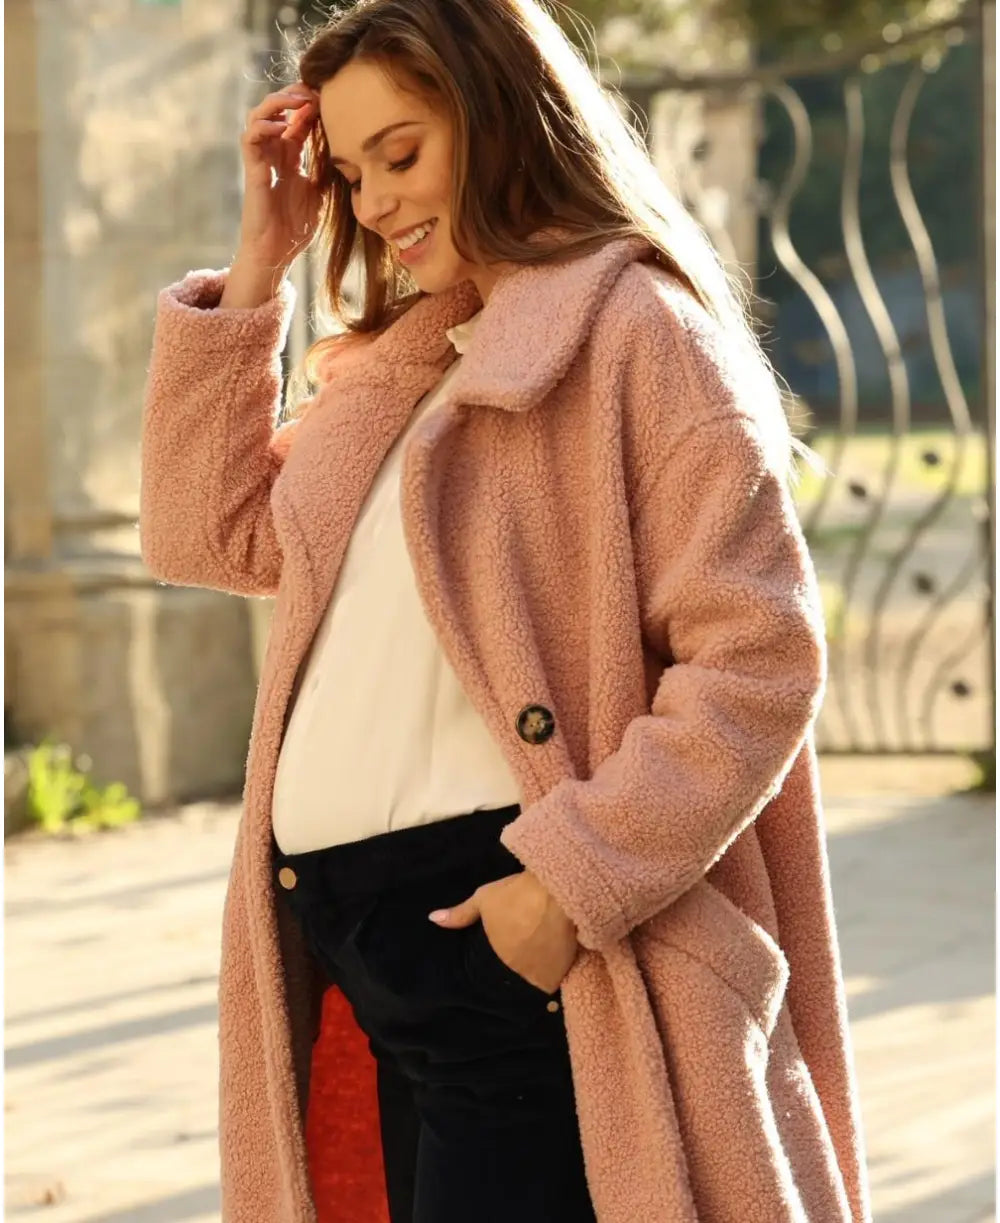 Pink Léonie long pregnancy coat - Coats and jackets